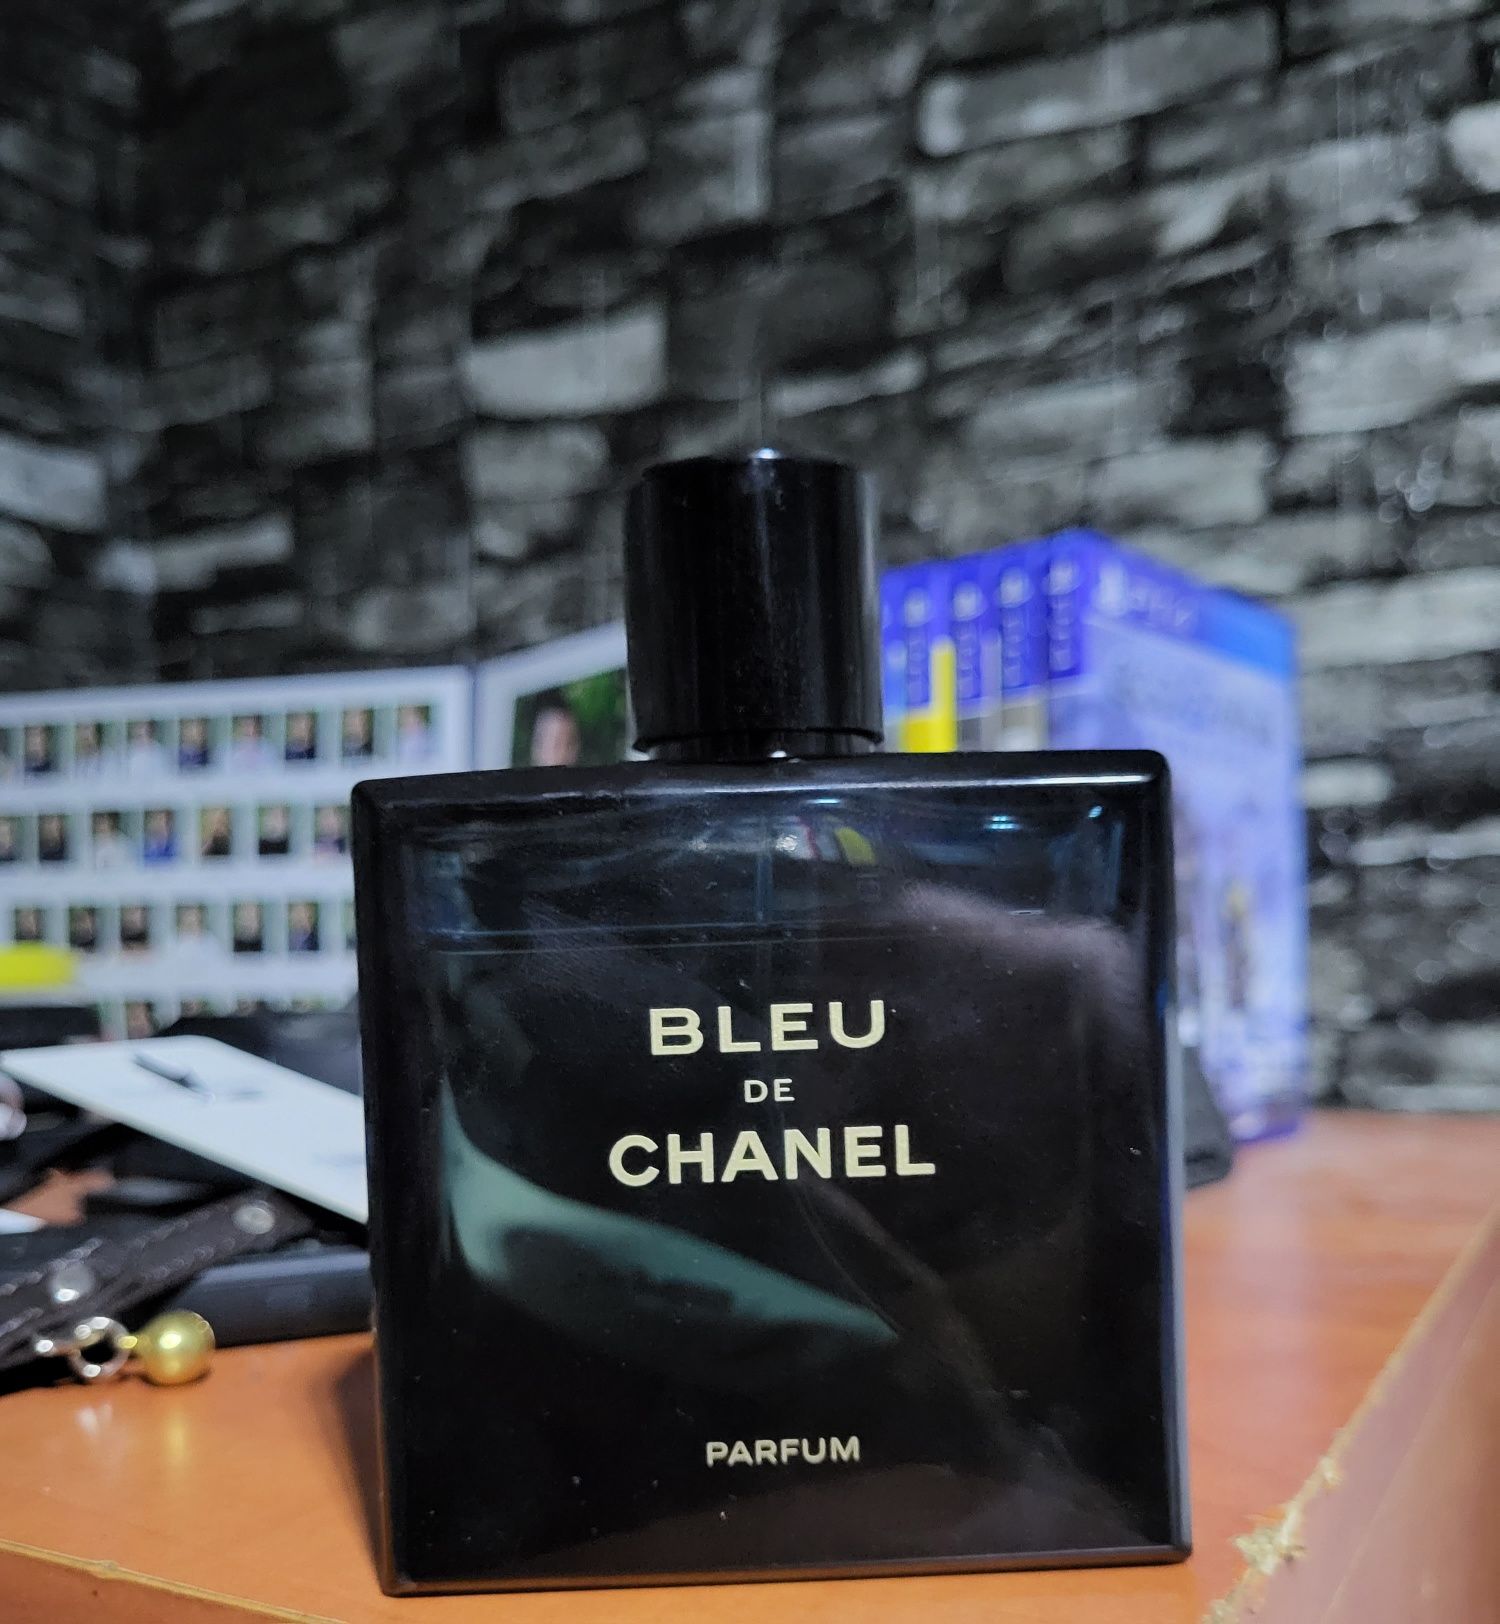 Bleu de chanel Parfum